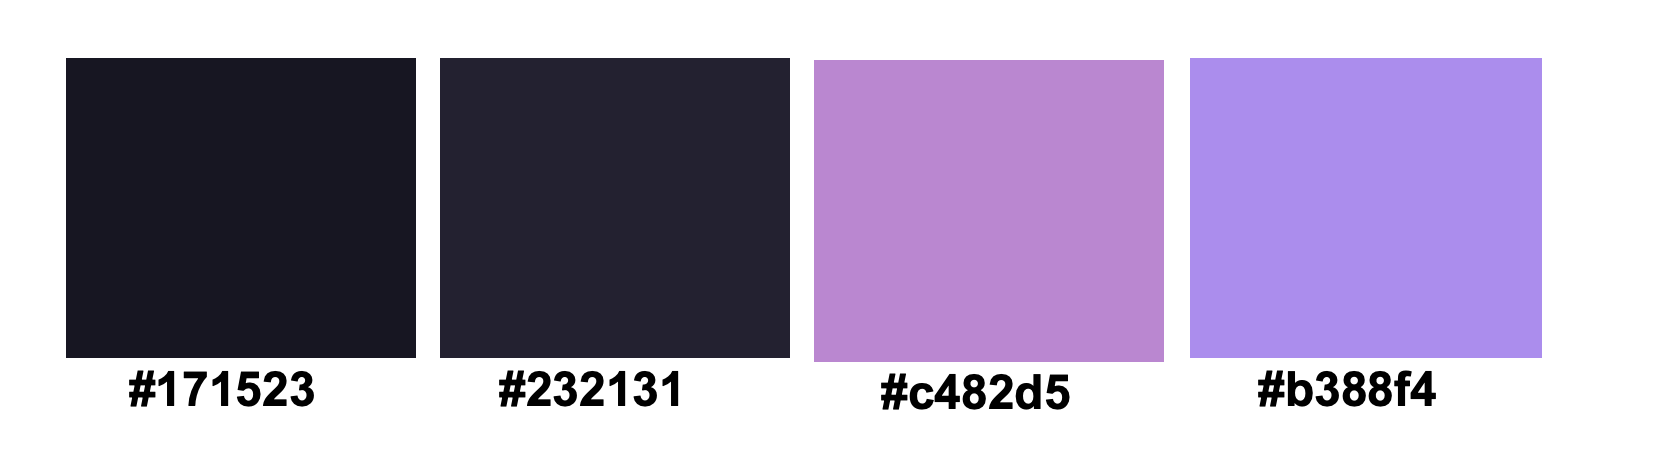 color swatch of the plum color scheme